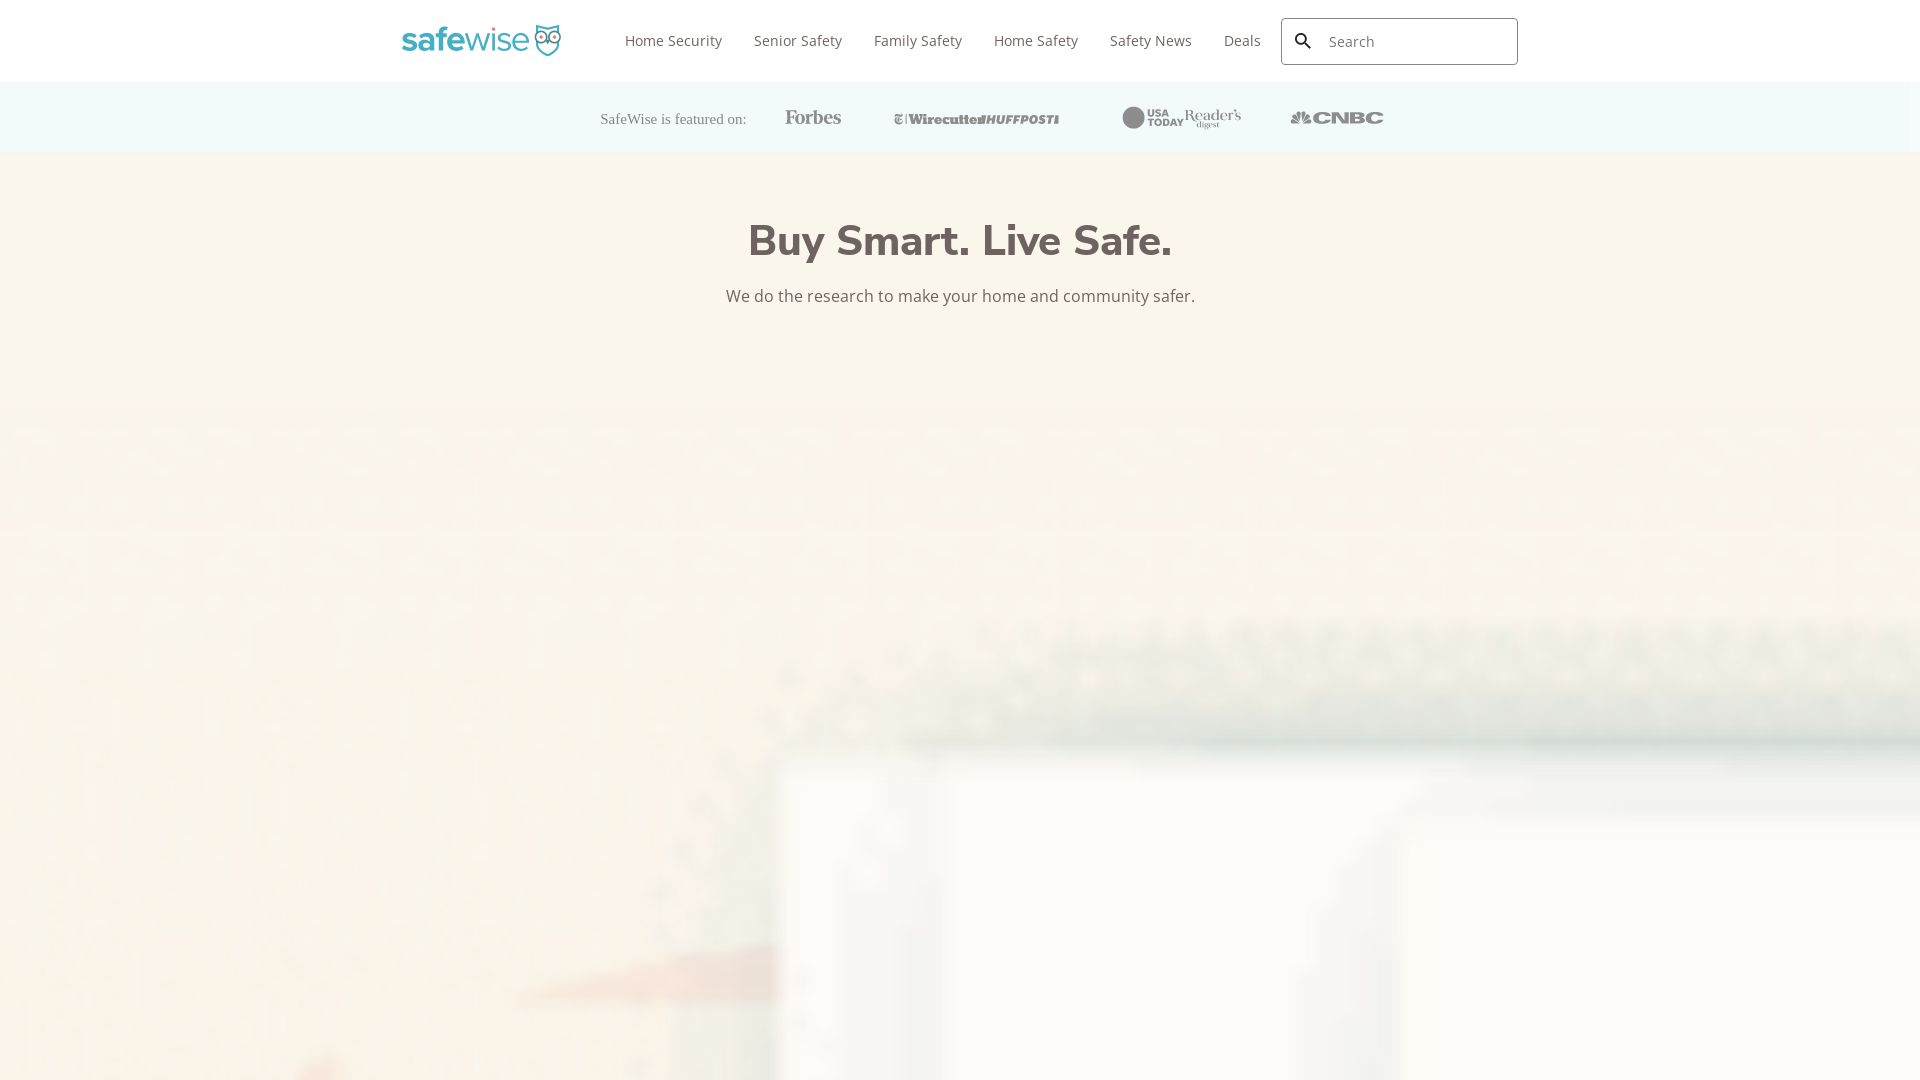 Website status safewise.com is   ONLINE